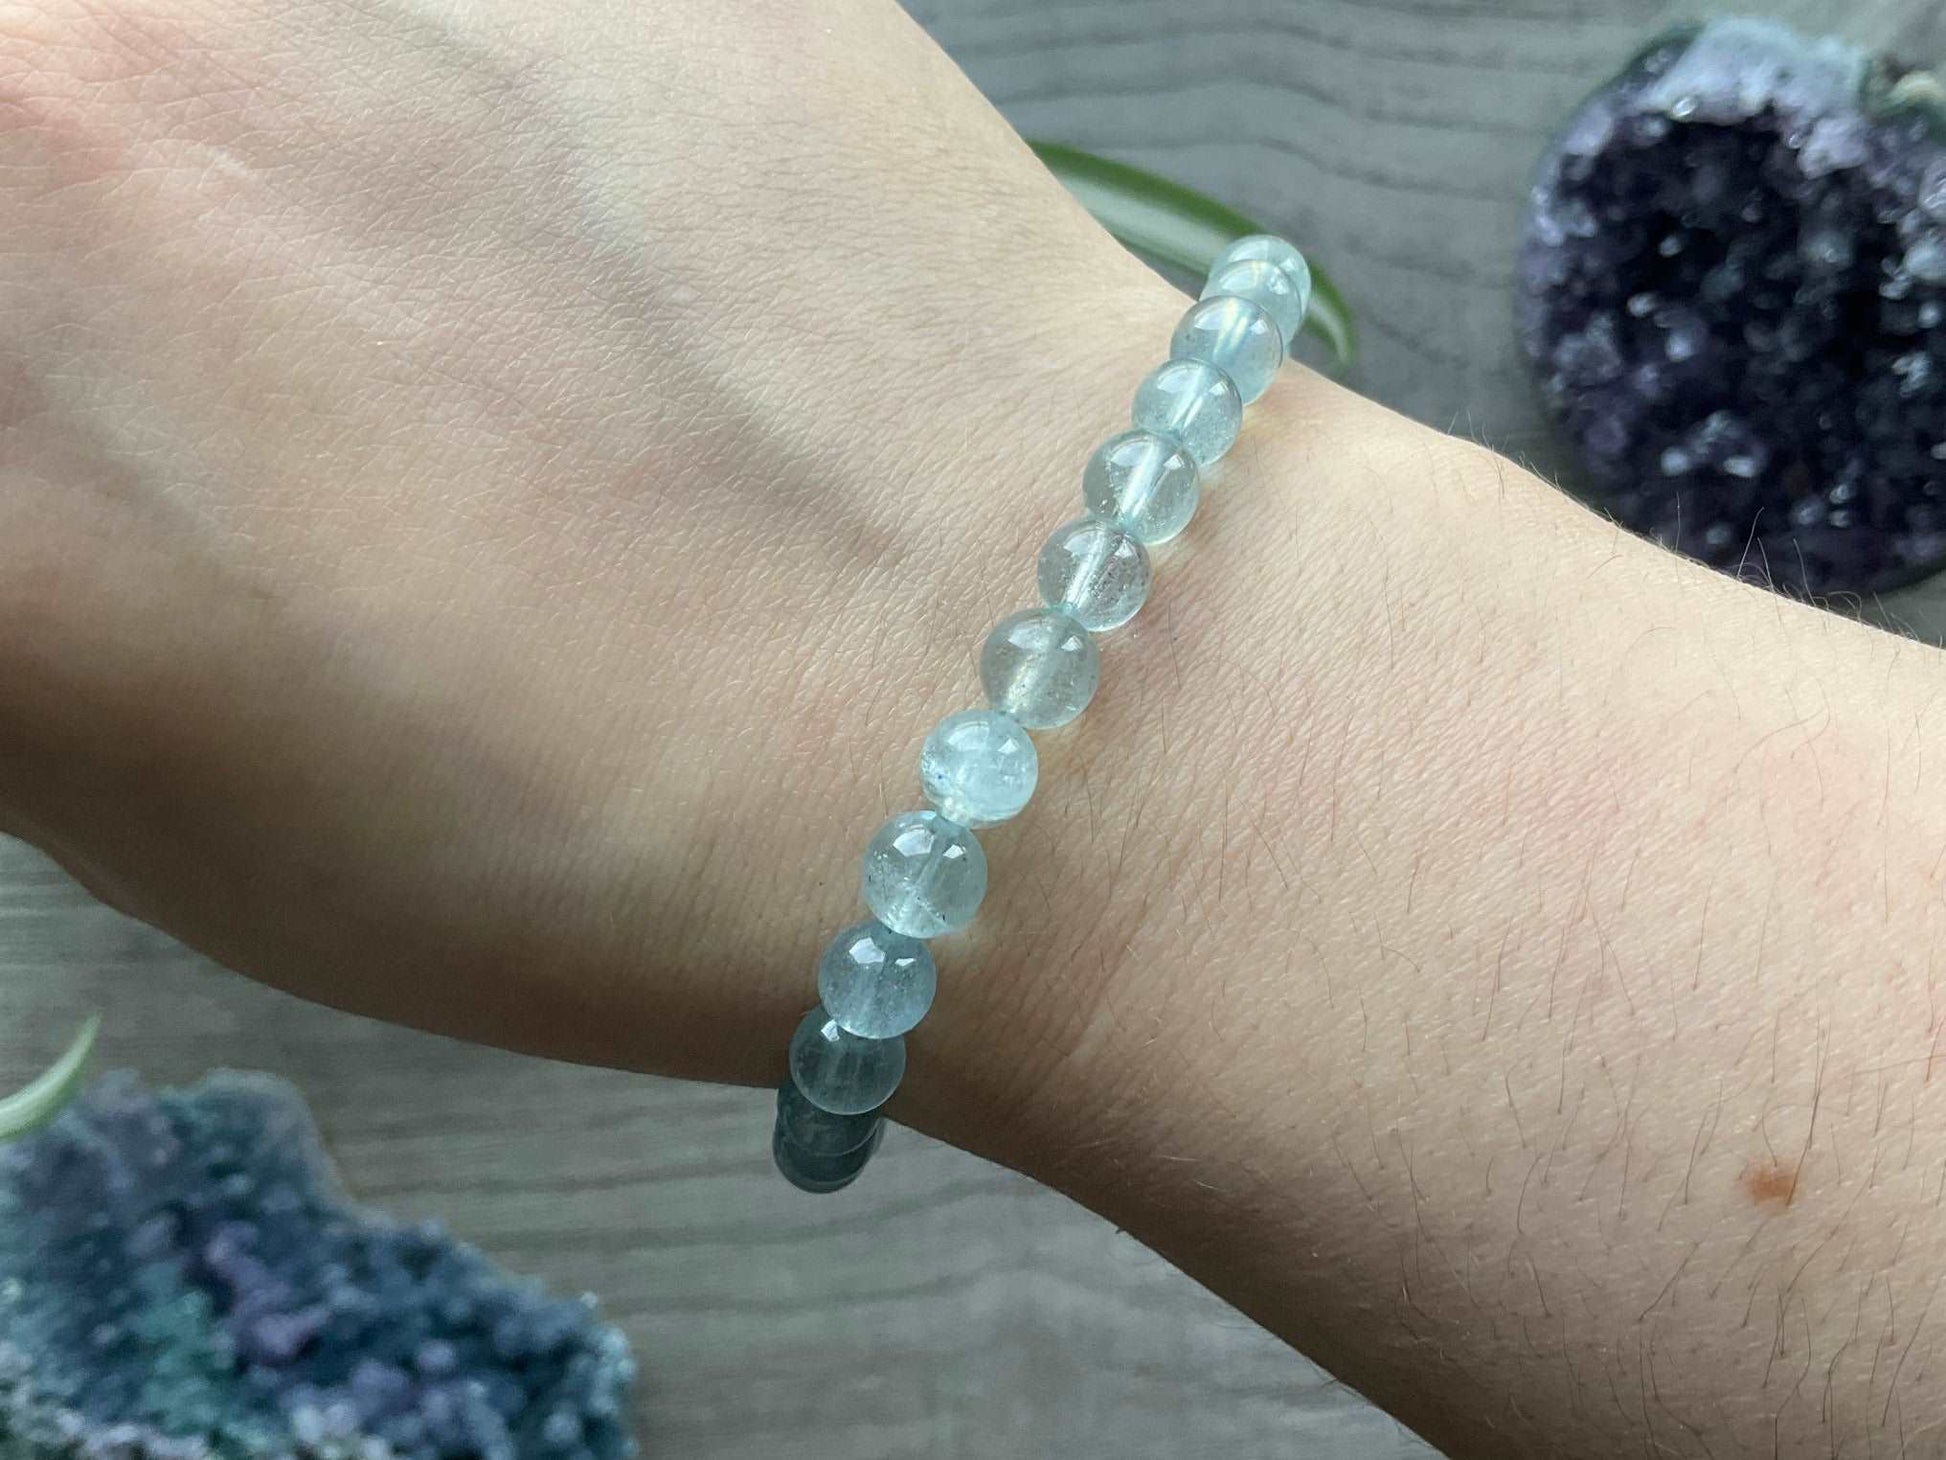 Pictured is an aquamarine bead bracelet.